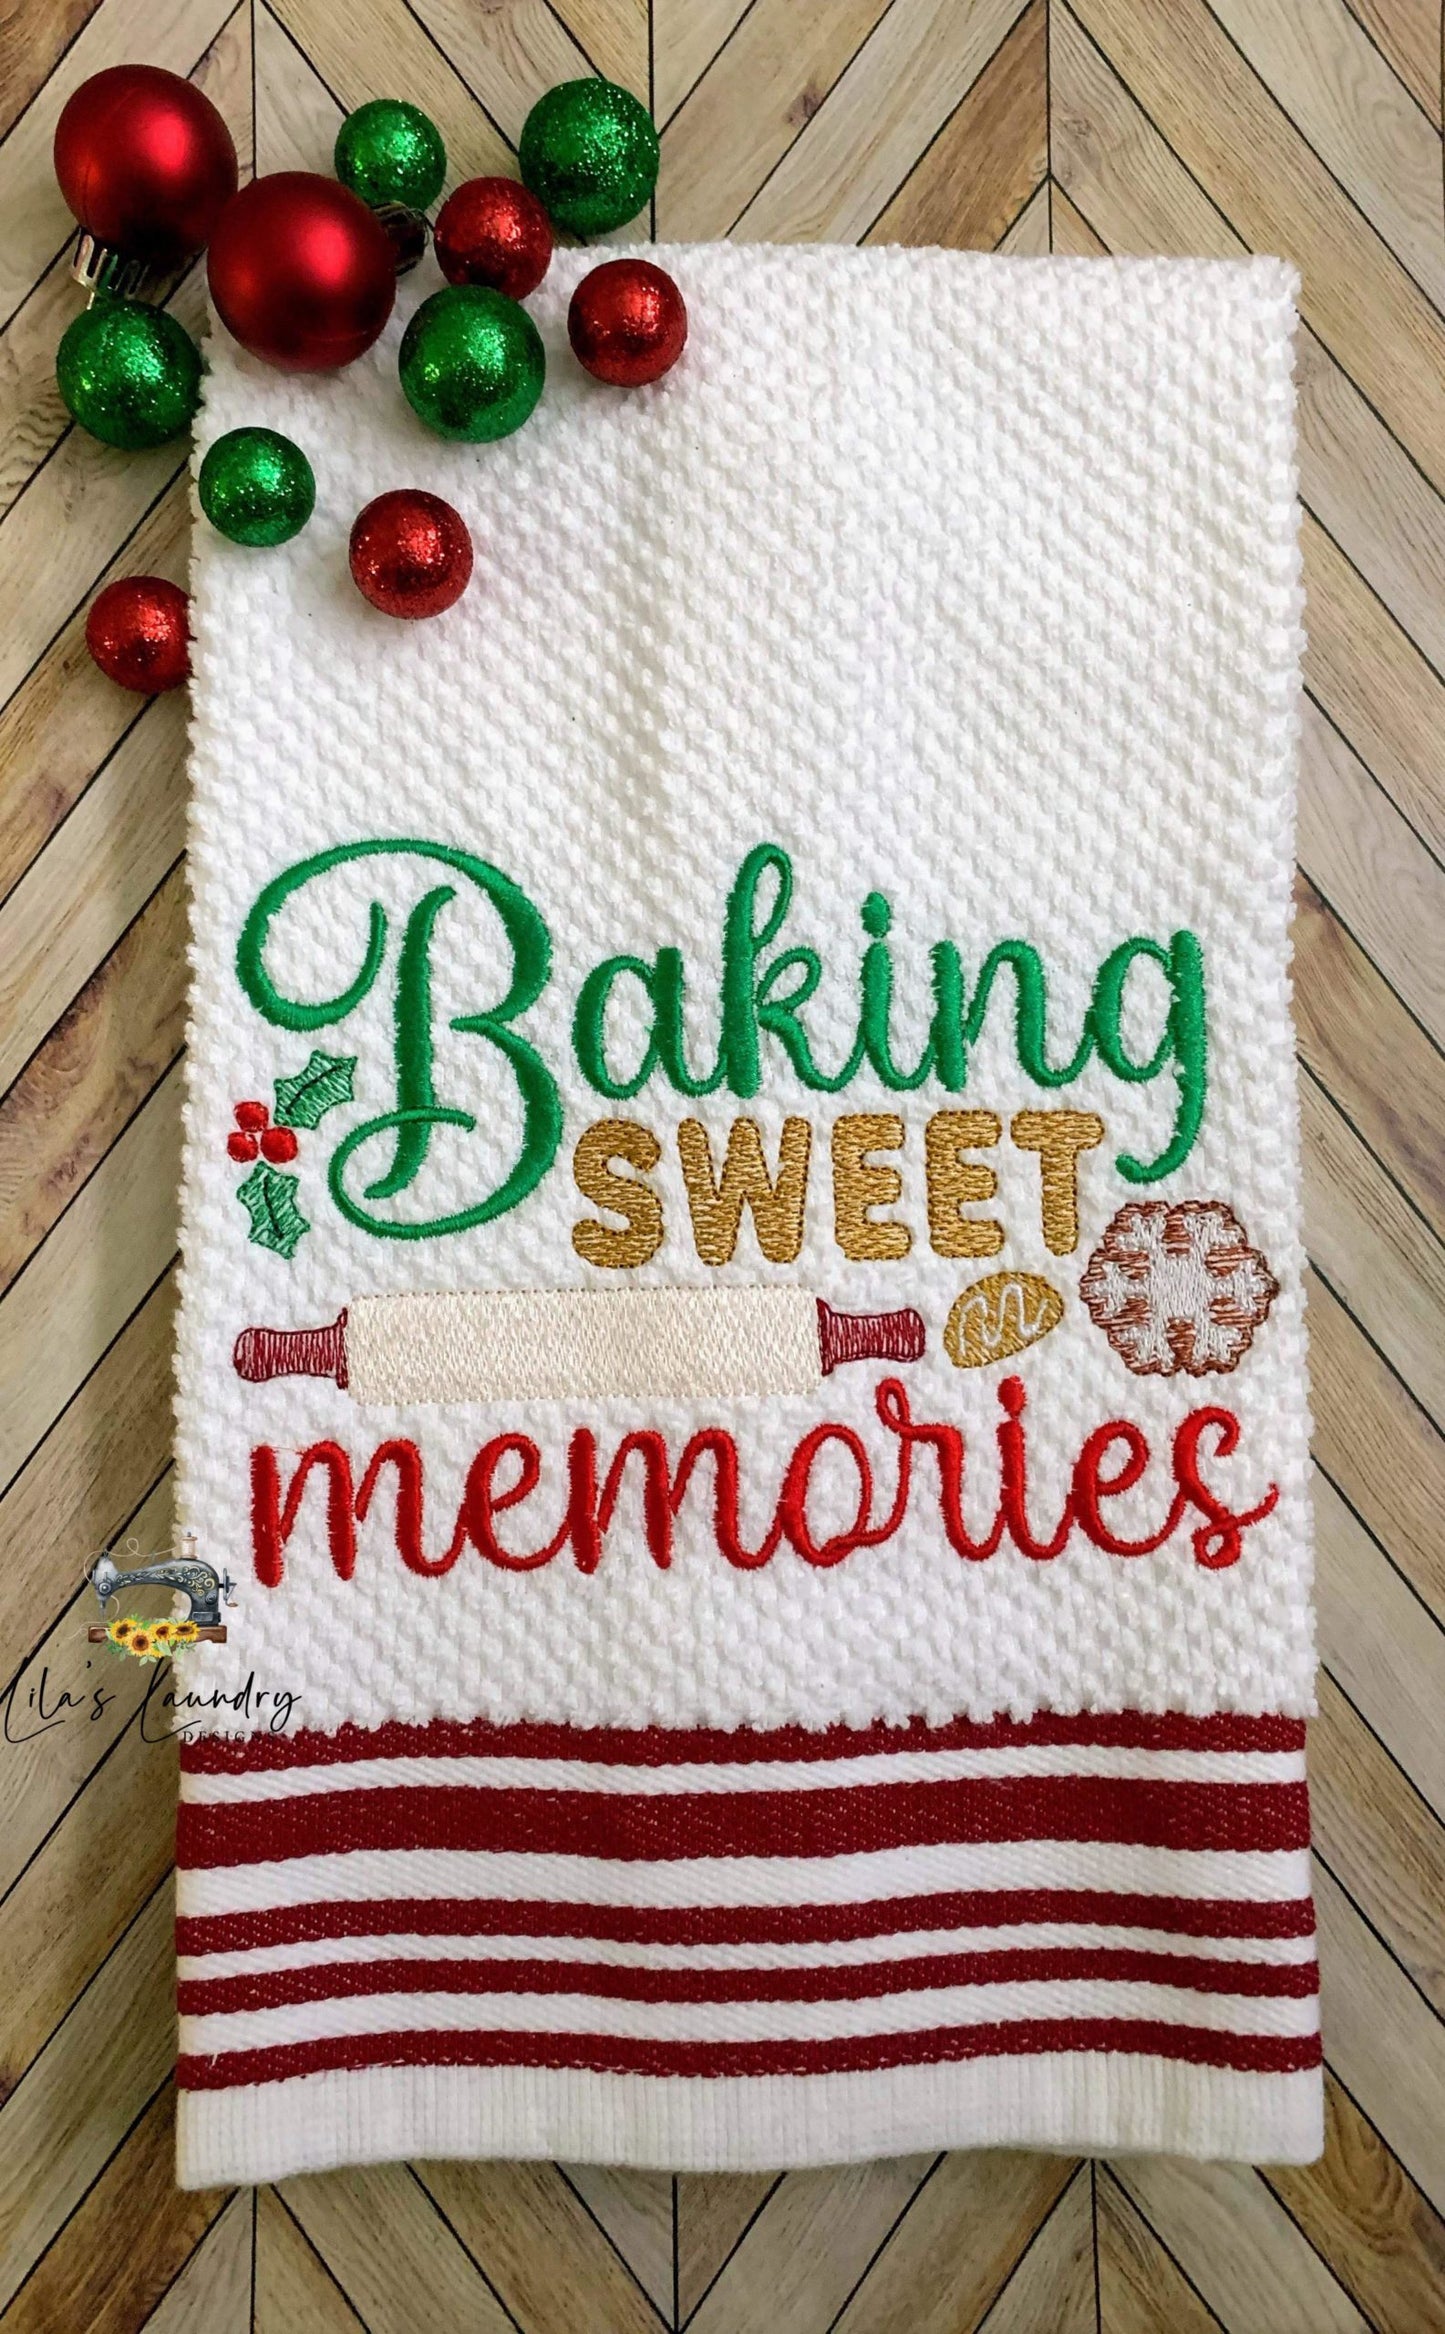 Baking Sweet Memories - 3 sizes- Digital Embroidery Design